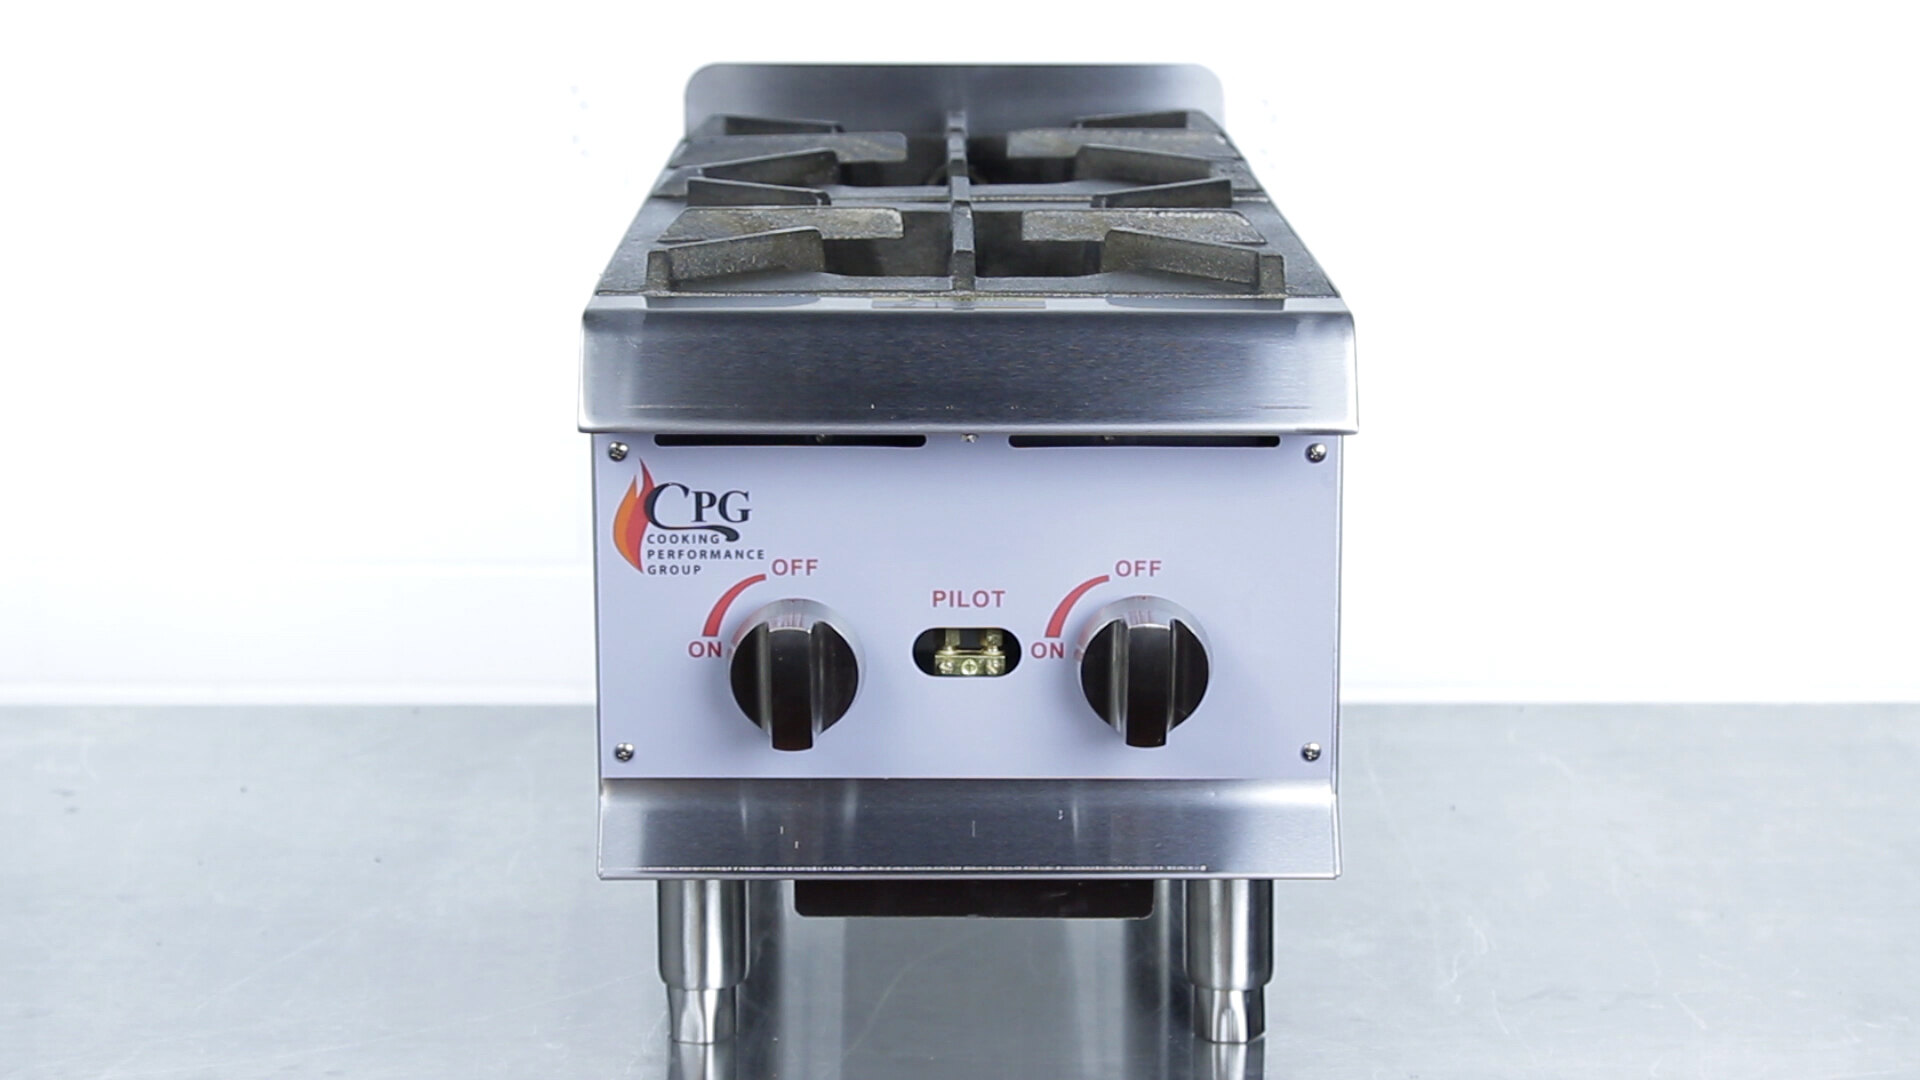 Cooking Performance Group R-CPG-24-NL 4 Burner Gas Countertop Range / Hot  Plate - 88,000 BTU